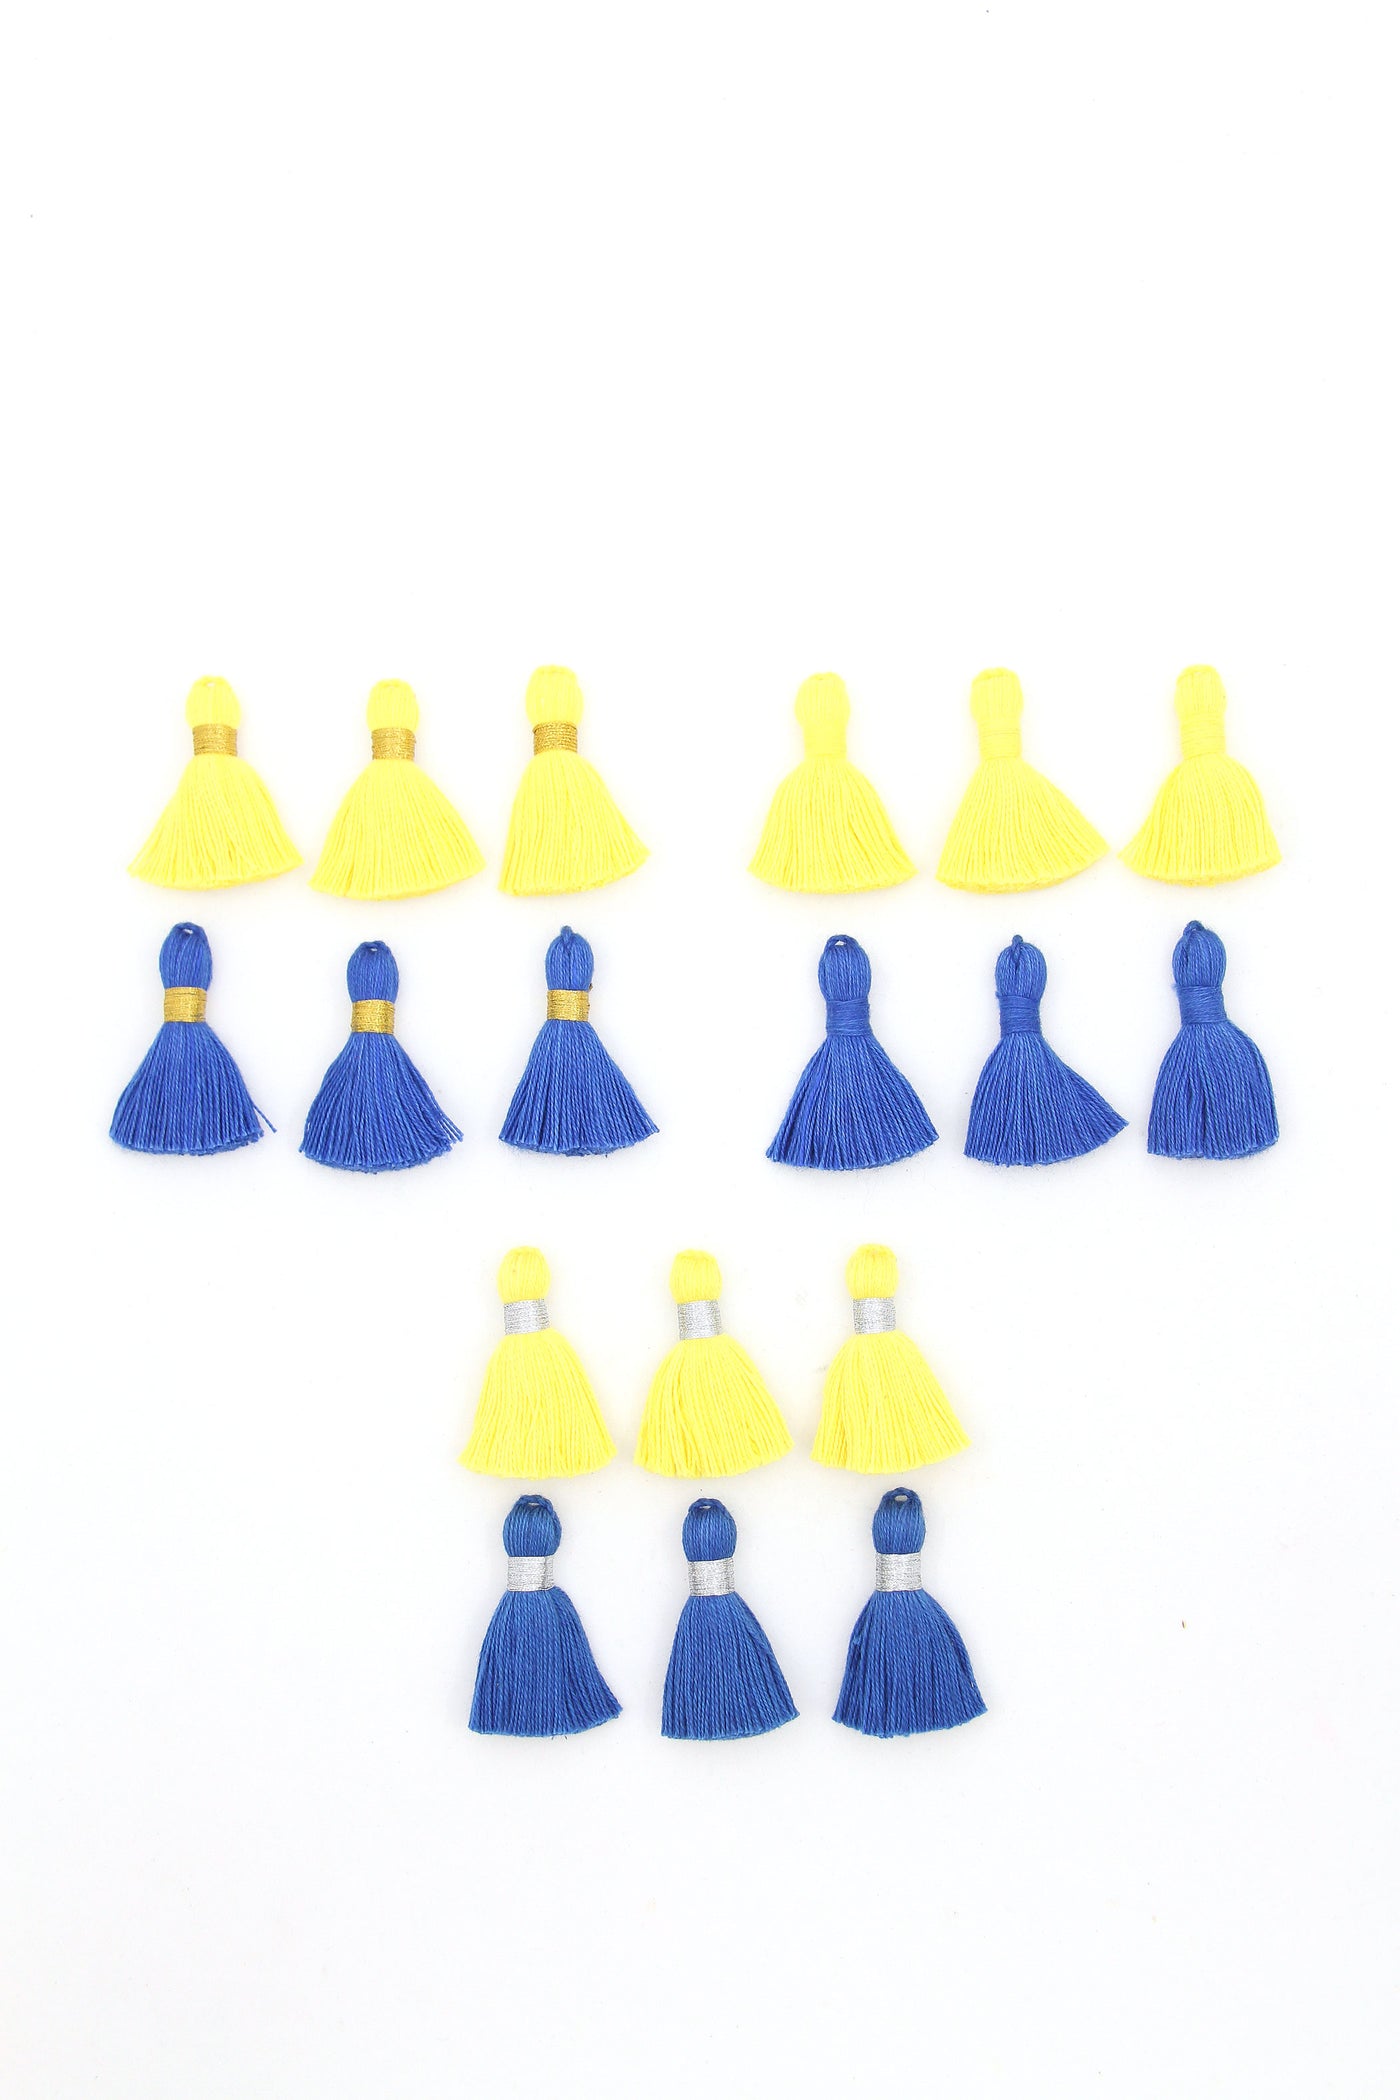 Peace in Ukraine Tassel Pack: 6 Yellow & Blue Mini Tassels, Jewelry Making Supplies, 1.25" Cotton Fringe